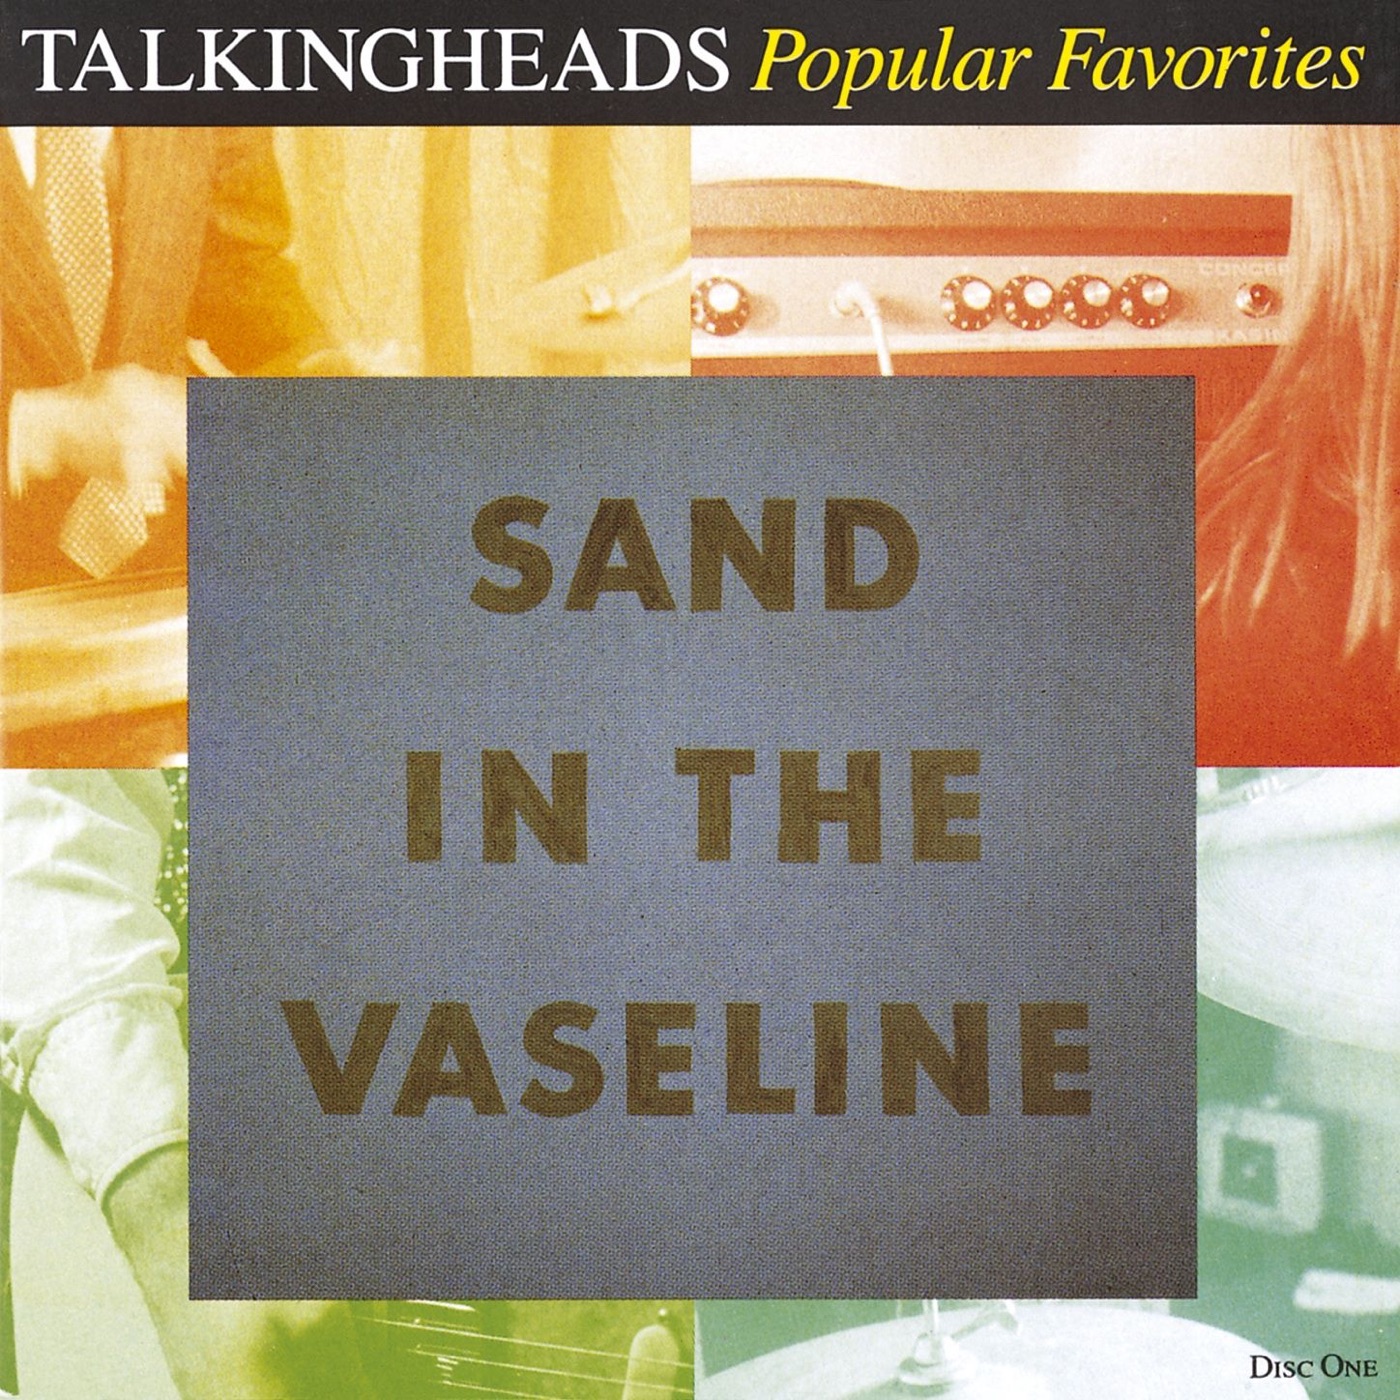 Popular Favorites 1976 - 1992 / Sand in the Vaseline by Talking Heads